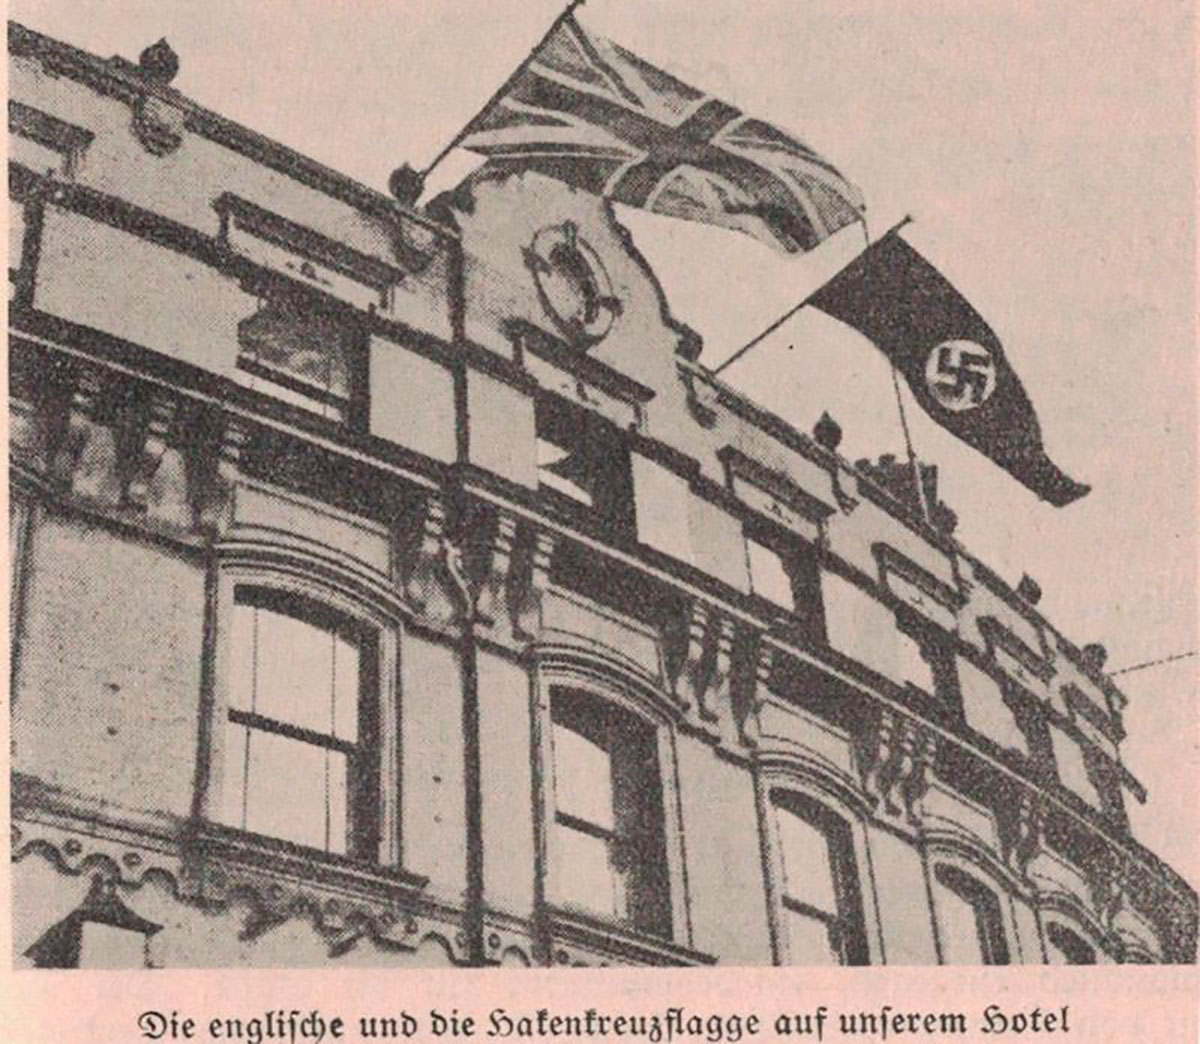 The photograph was printed in a Nazi propaganda newspaper.